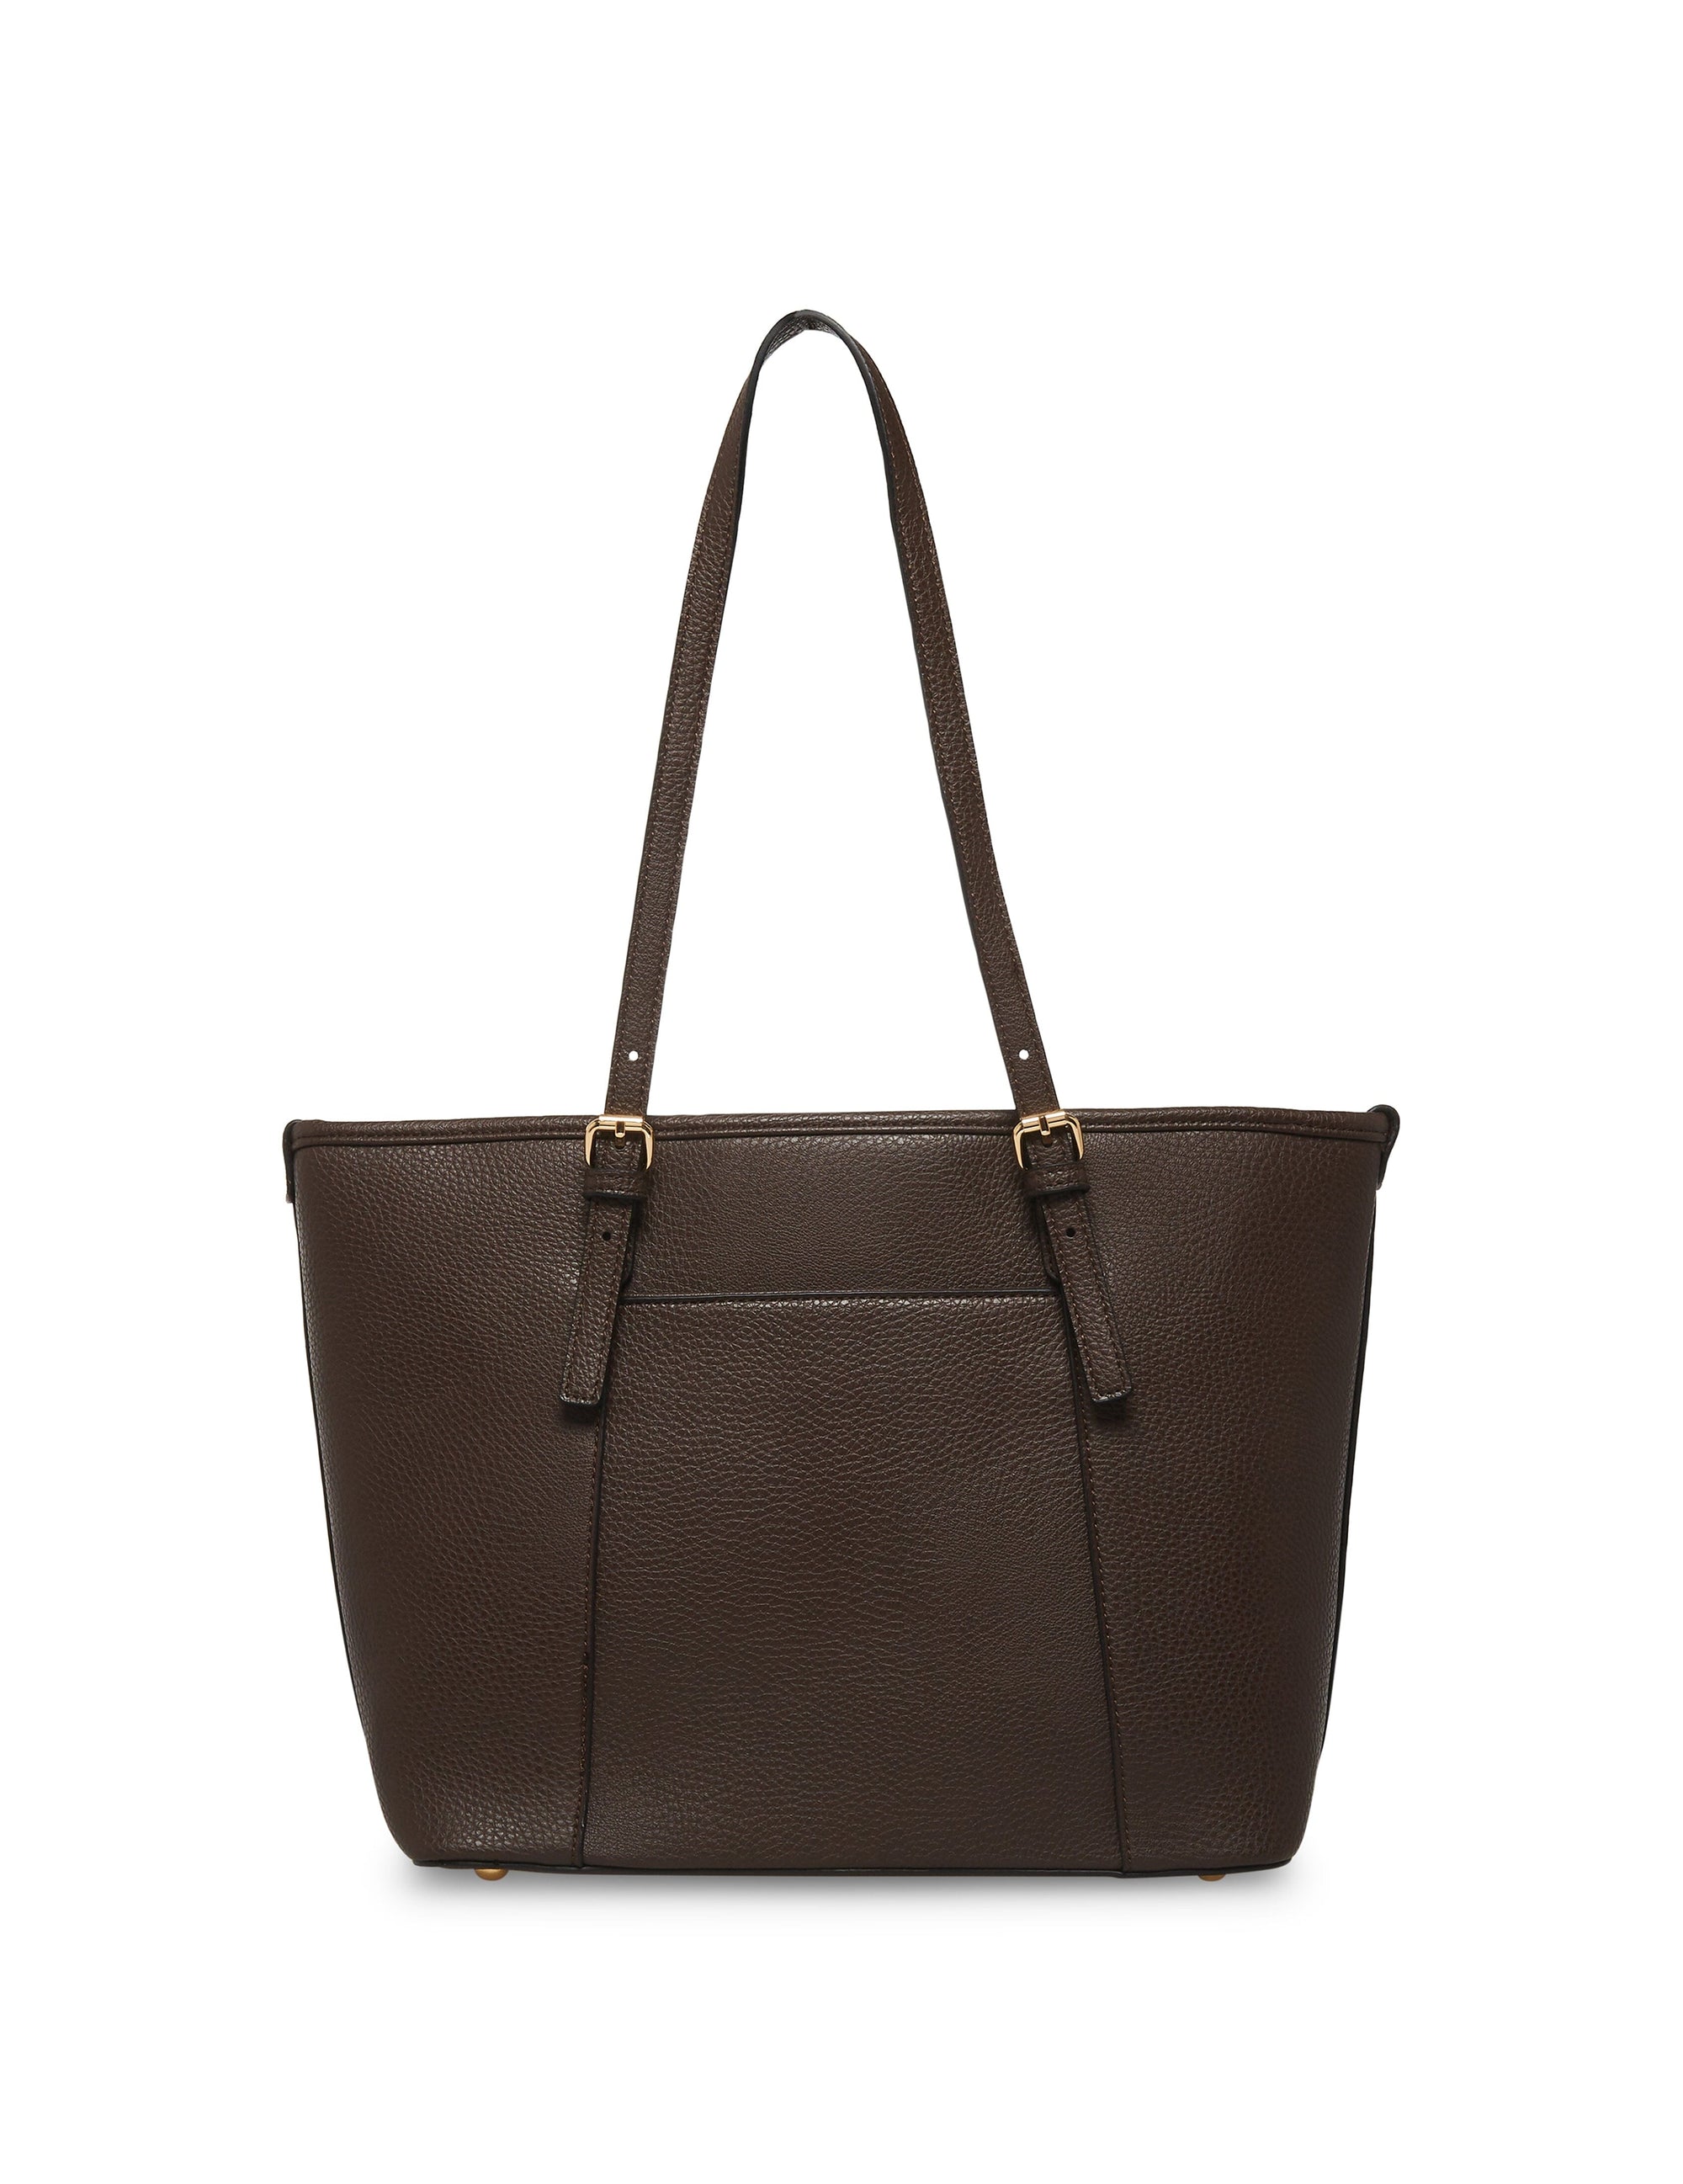 Cream and tan Anne Klein tote bag, | Women's - Bags & Wallets | Calgary |  Kijiji